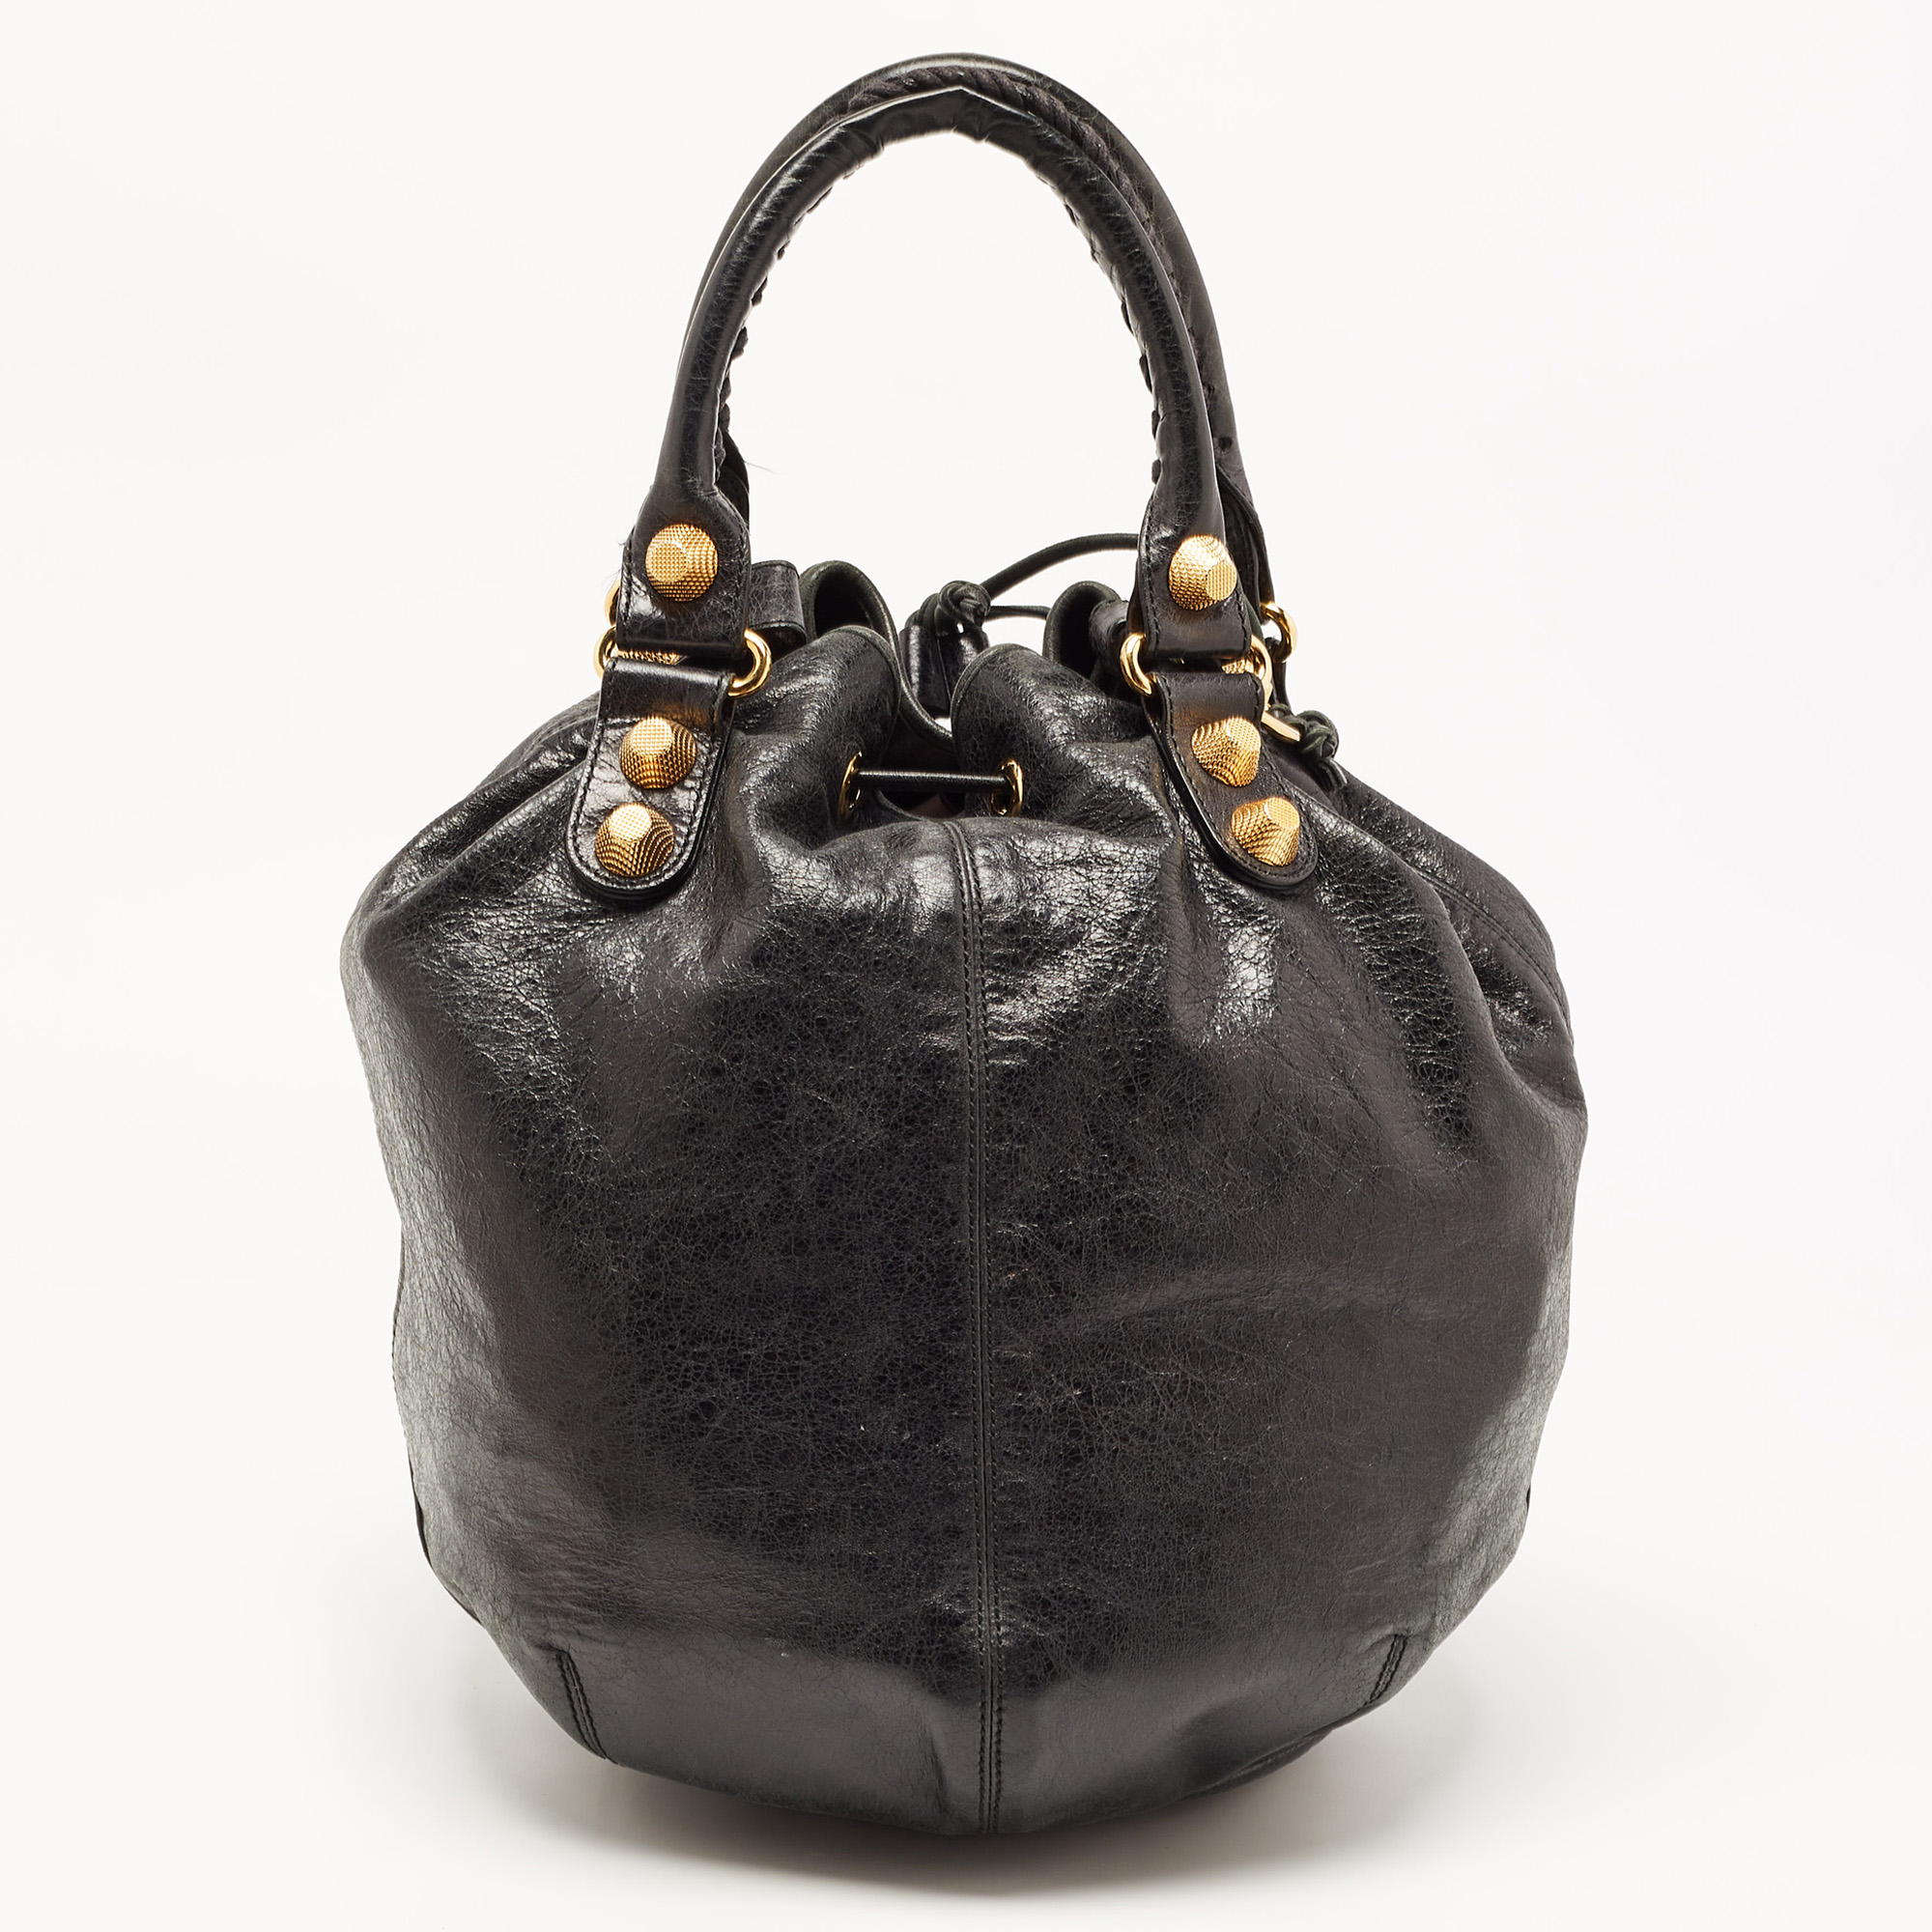 Balenciaga Black Leather GGH PomPon Bag